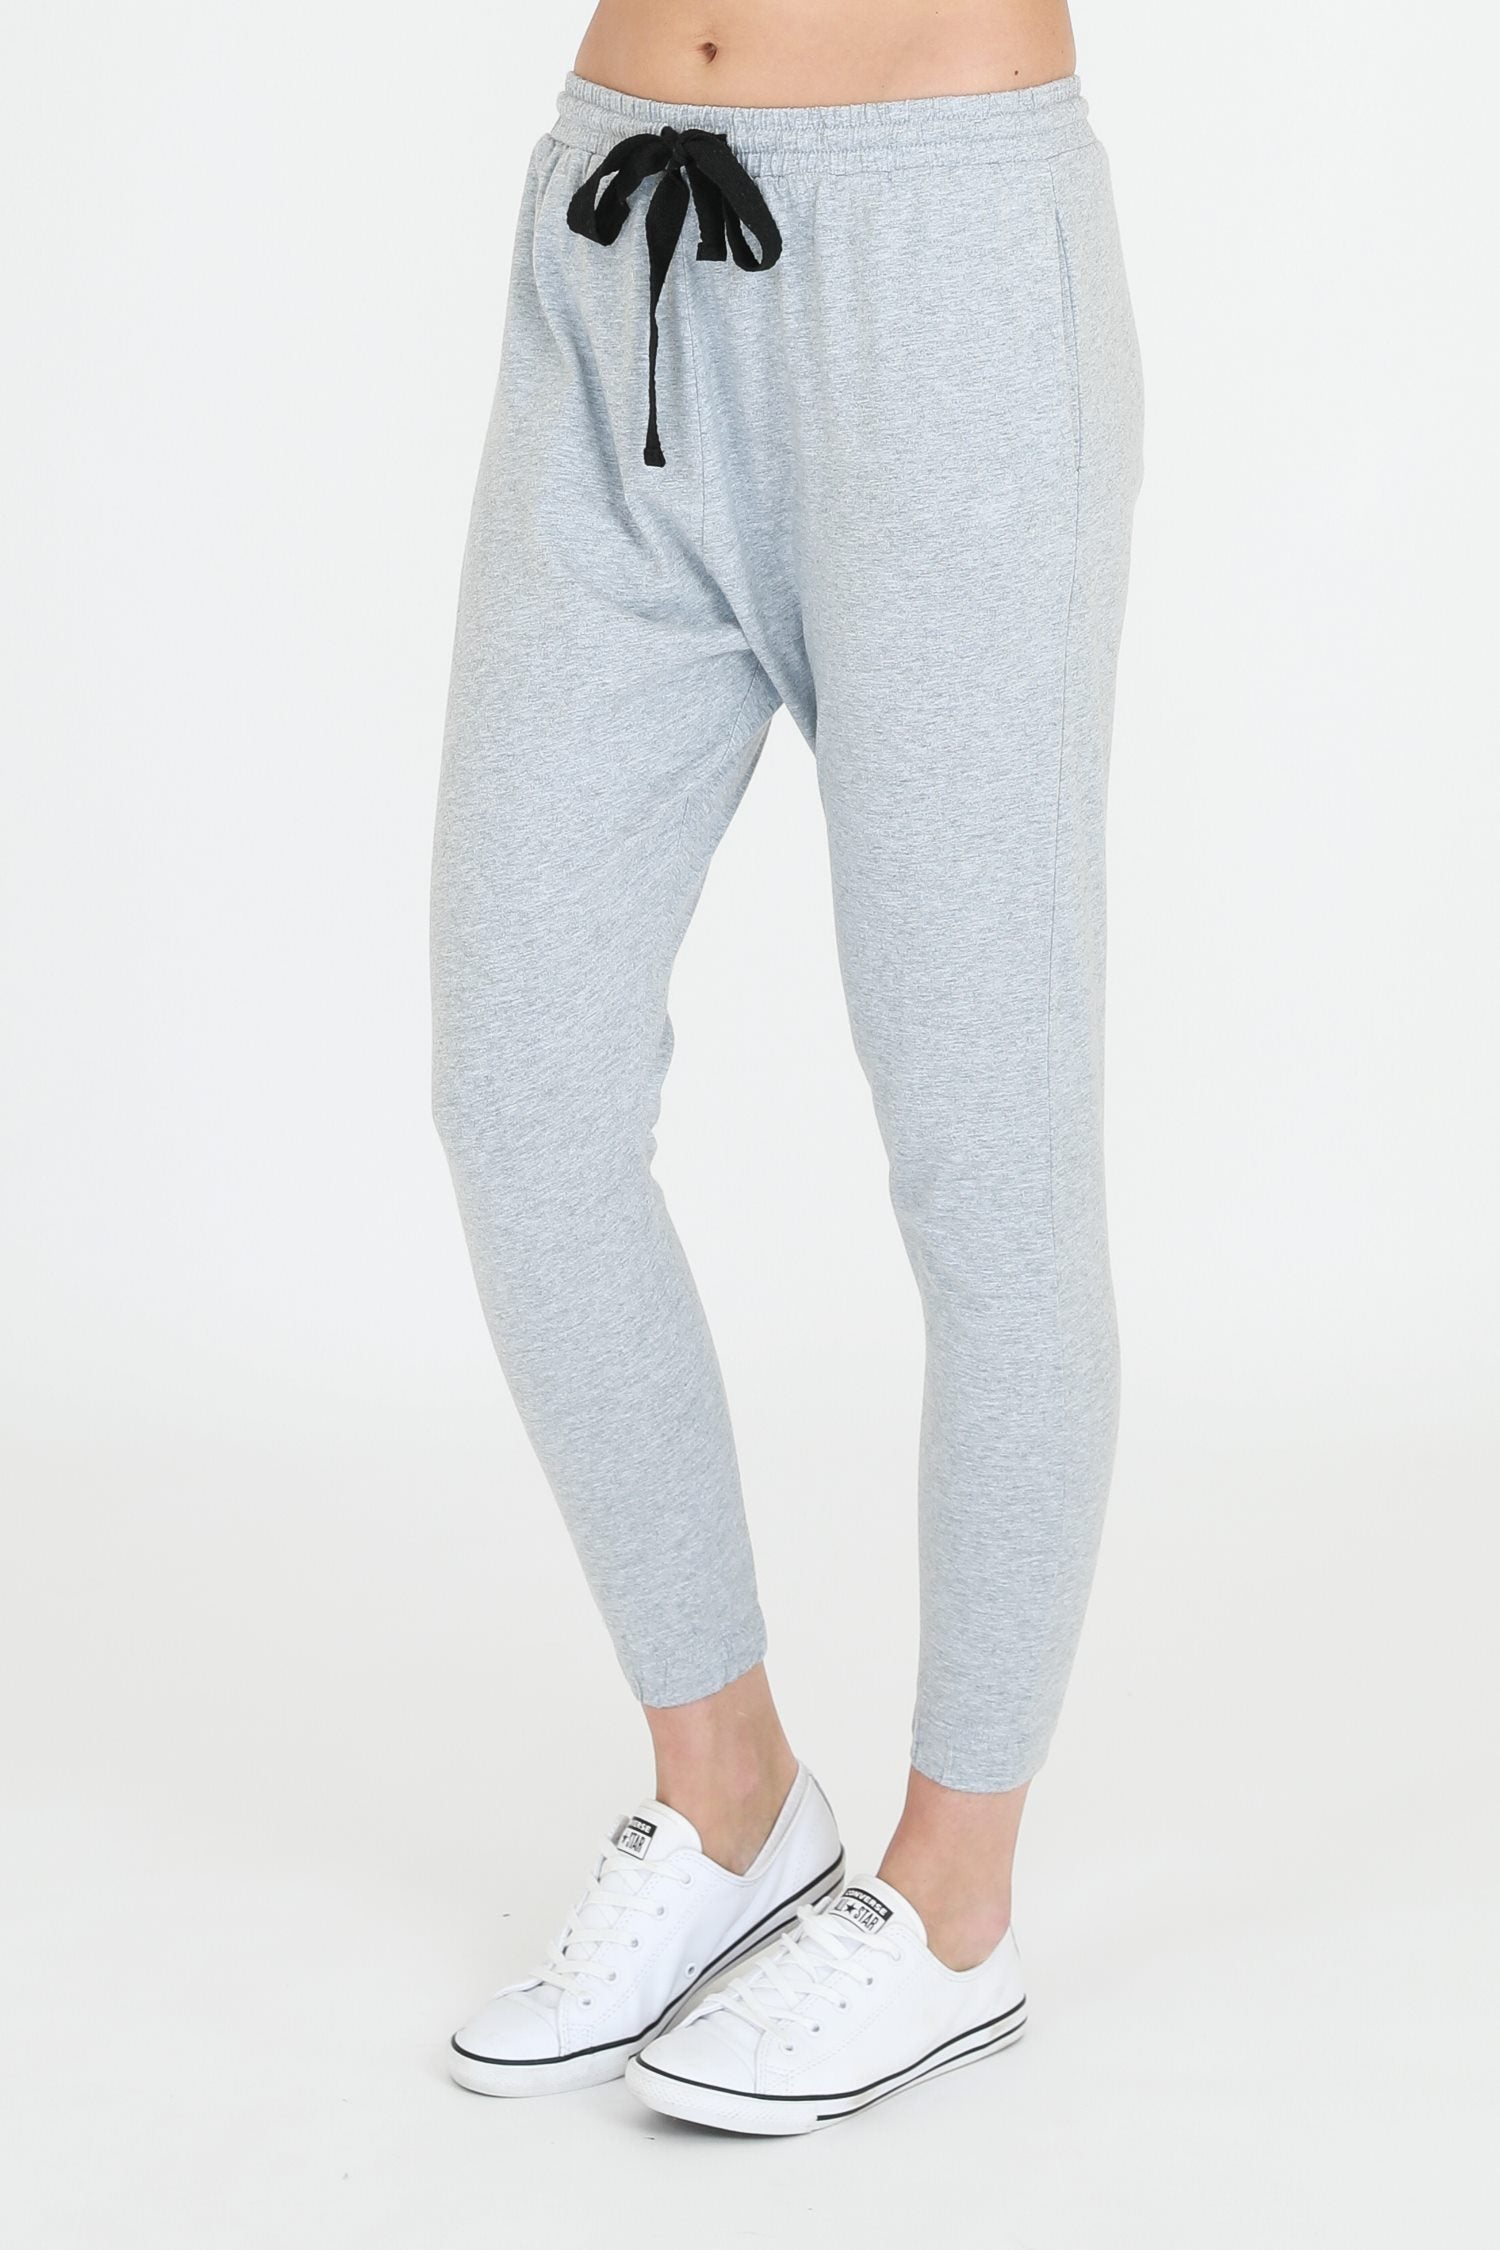 jogger pants drop crotch #color_grey marle